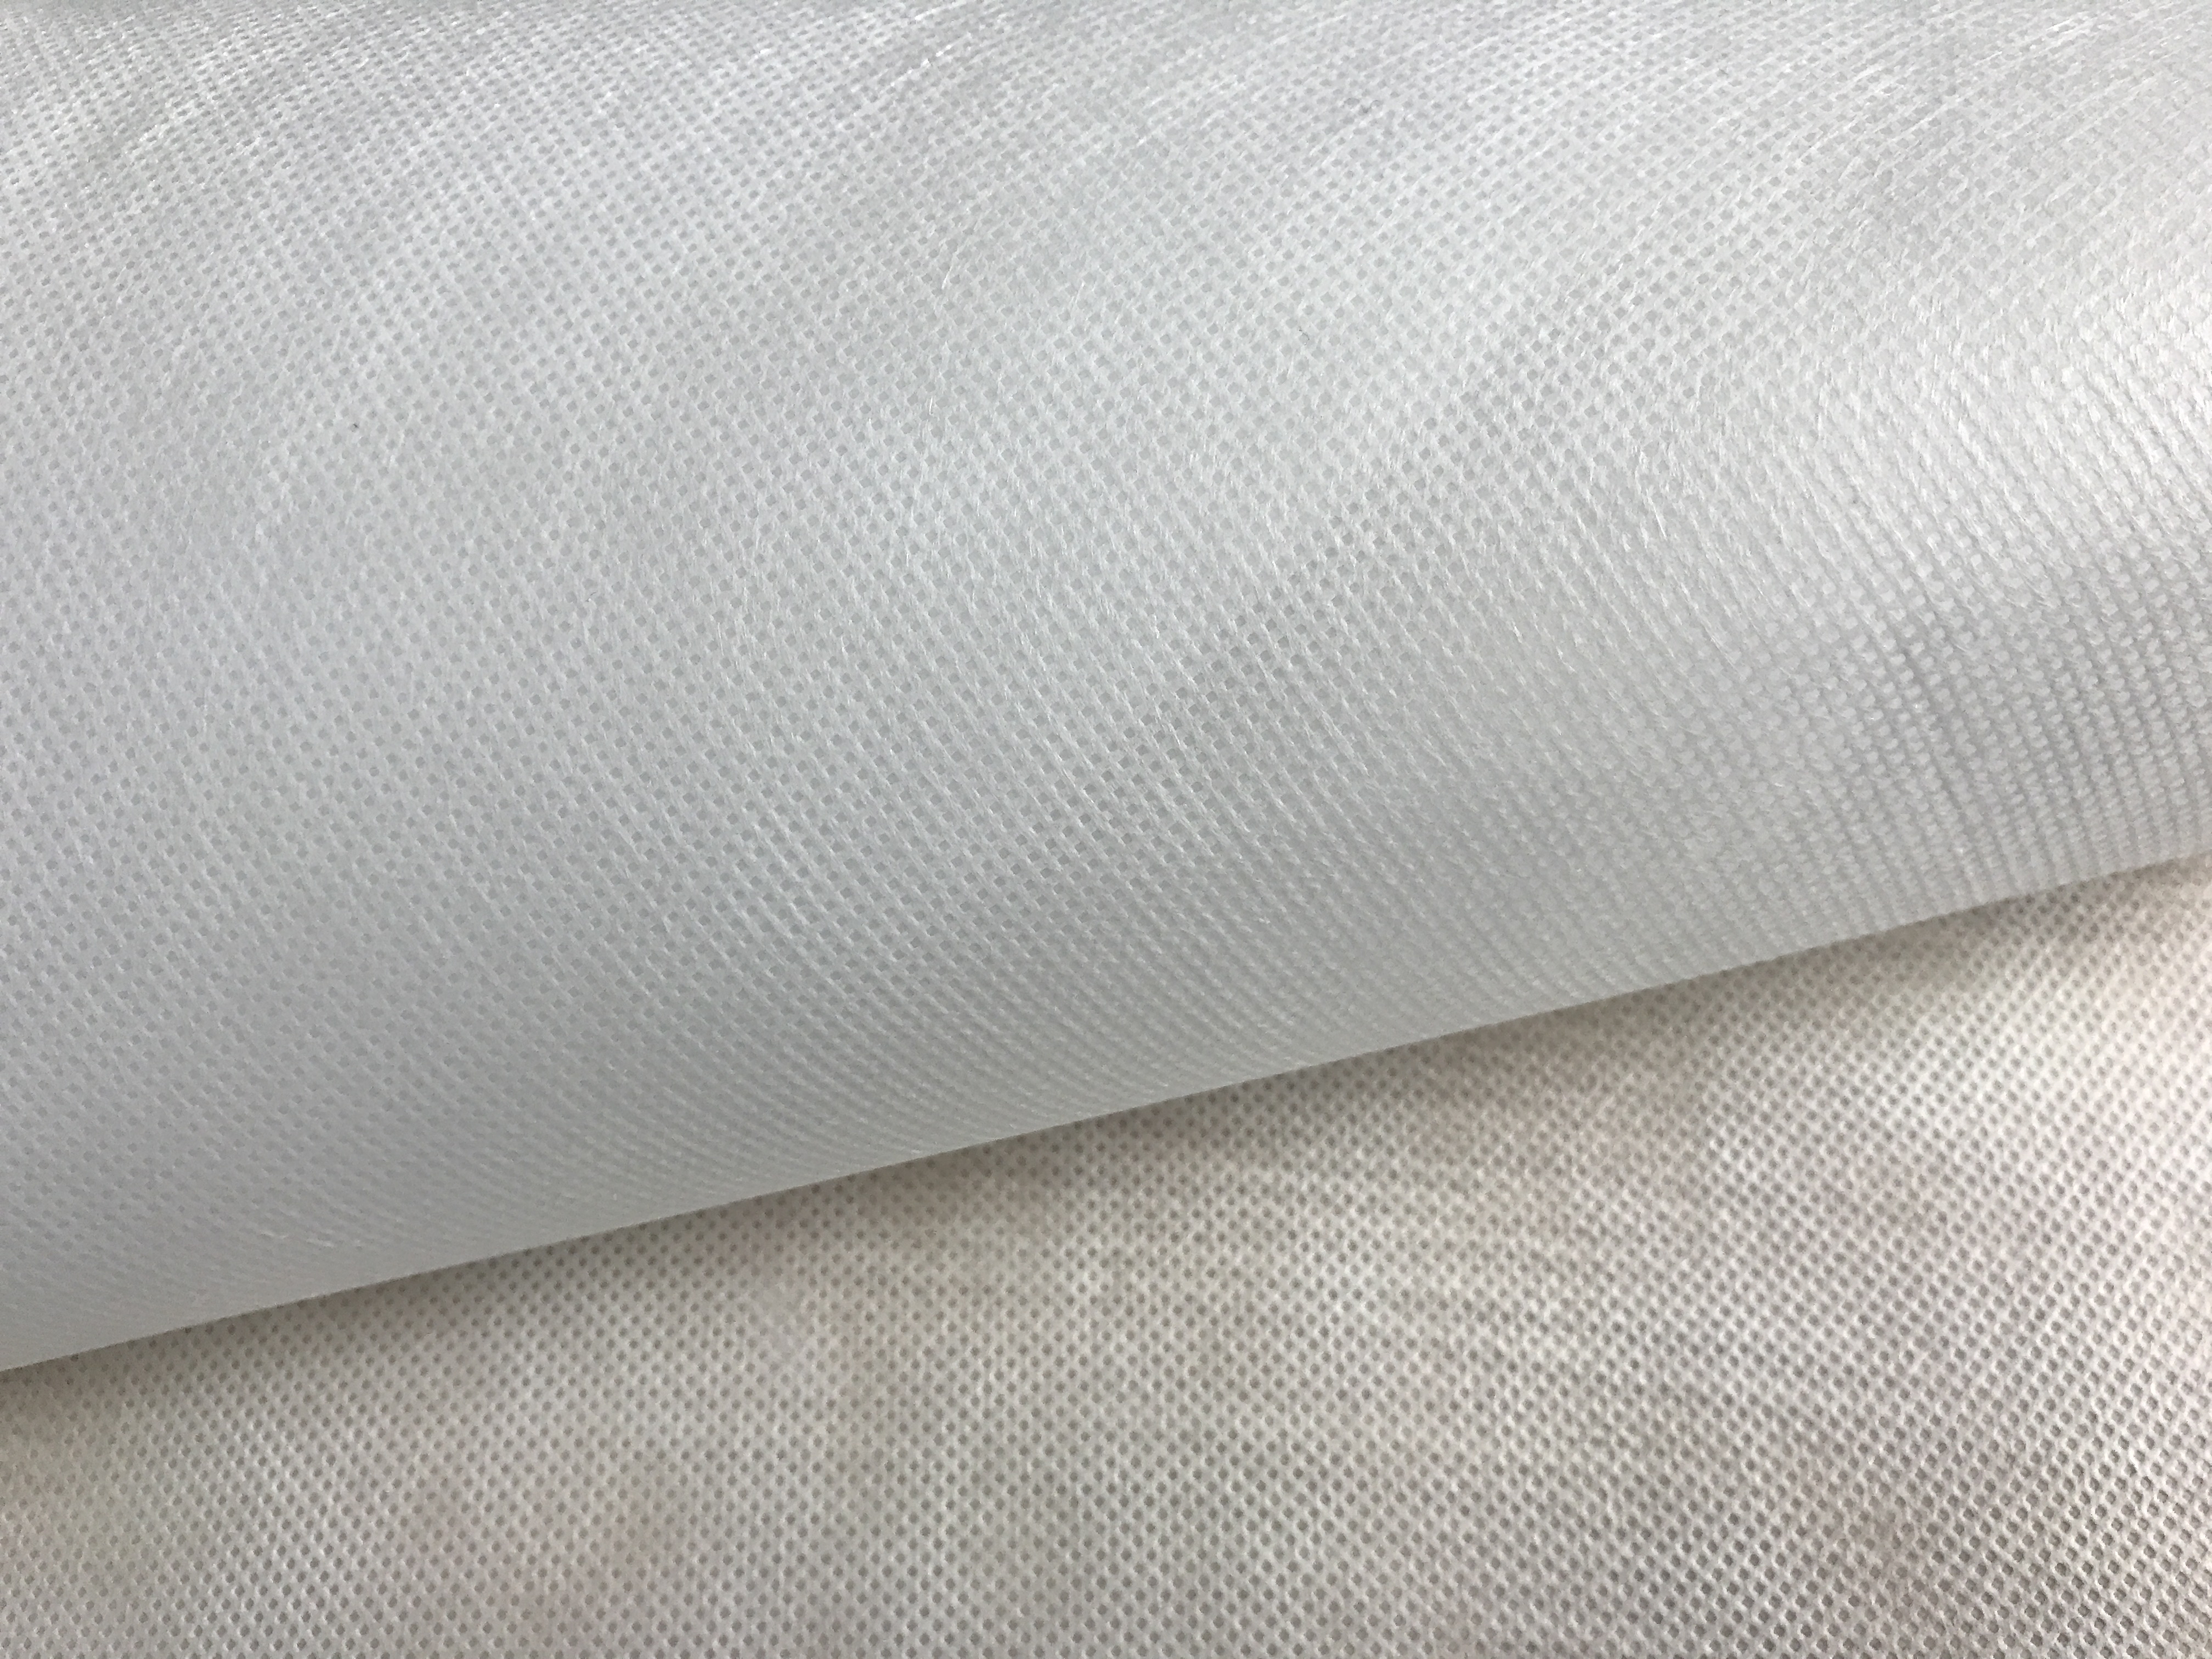 Polyester(PET) Spunbond Nonwoven Fabric